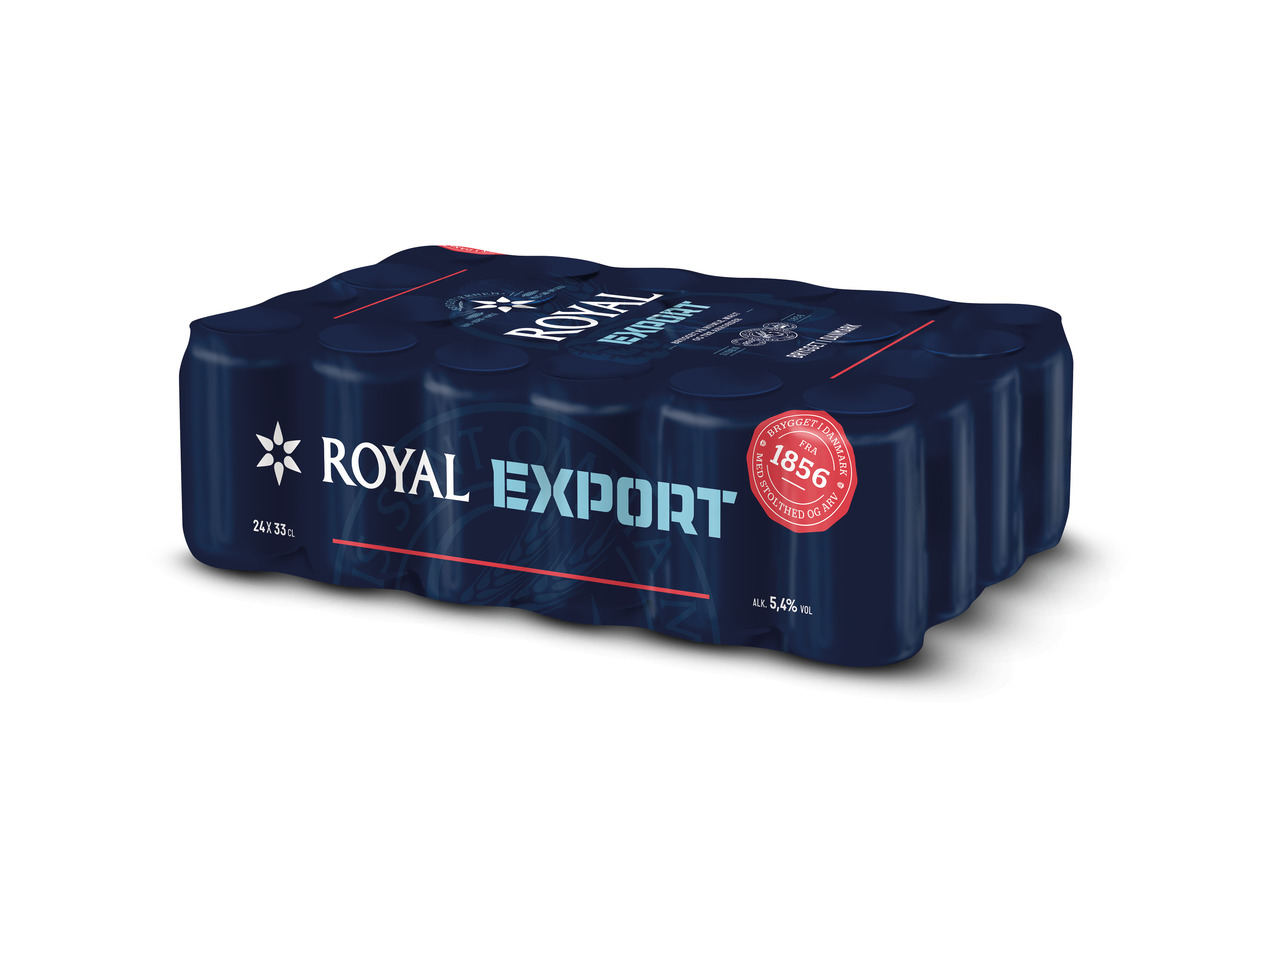 Heineken eller royal export1